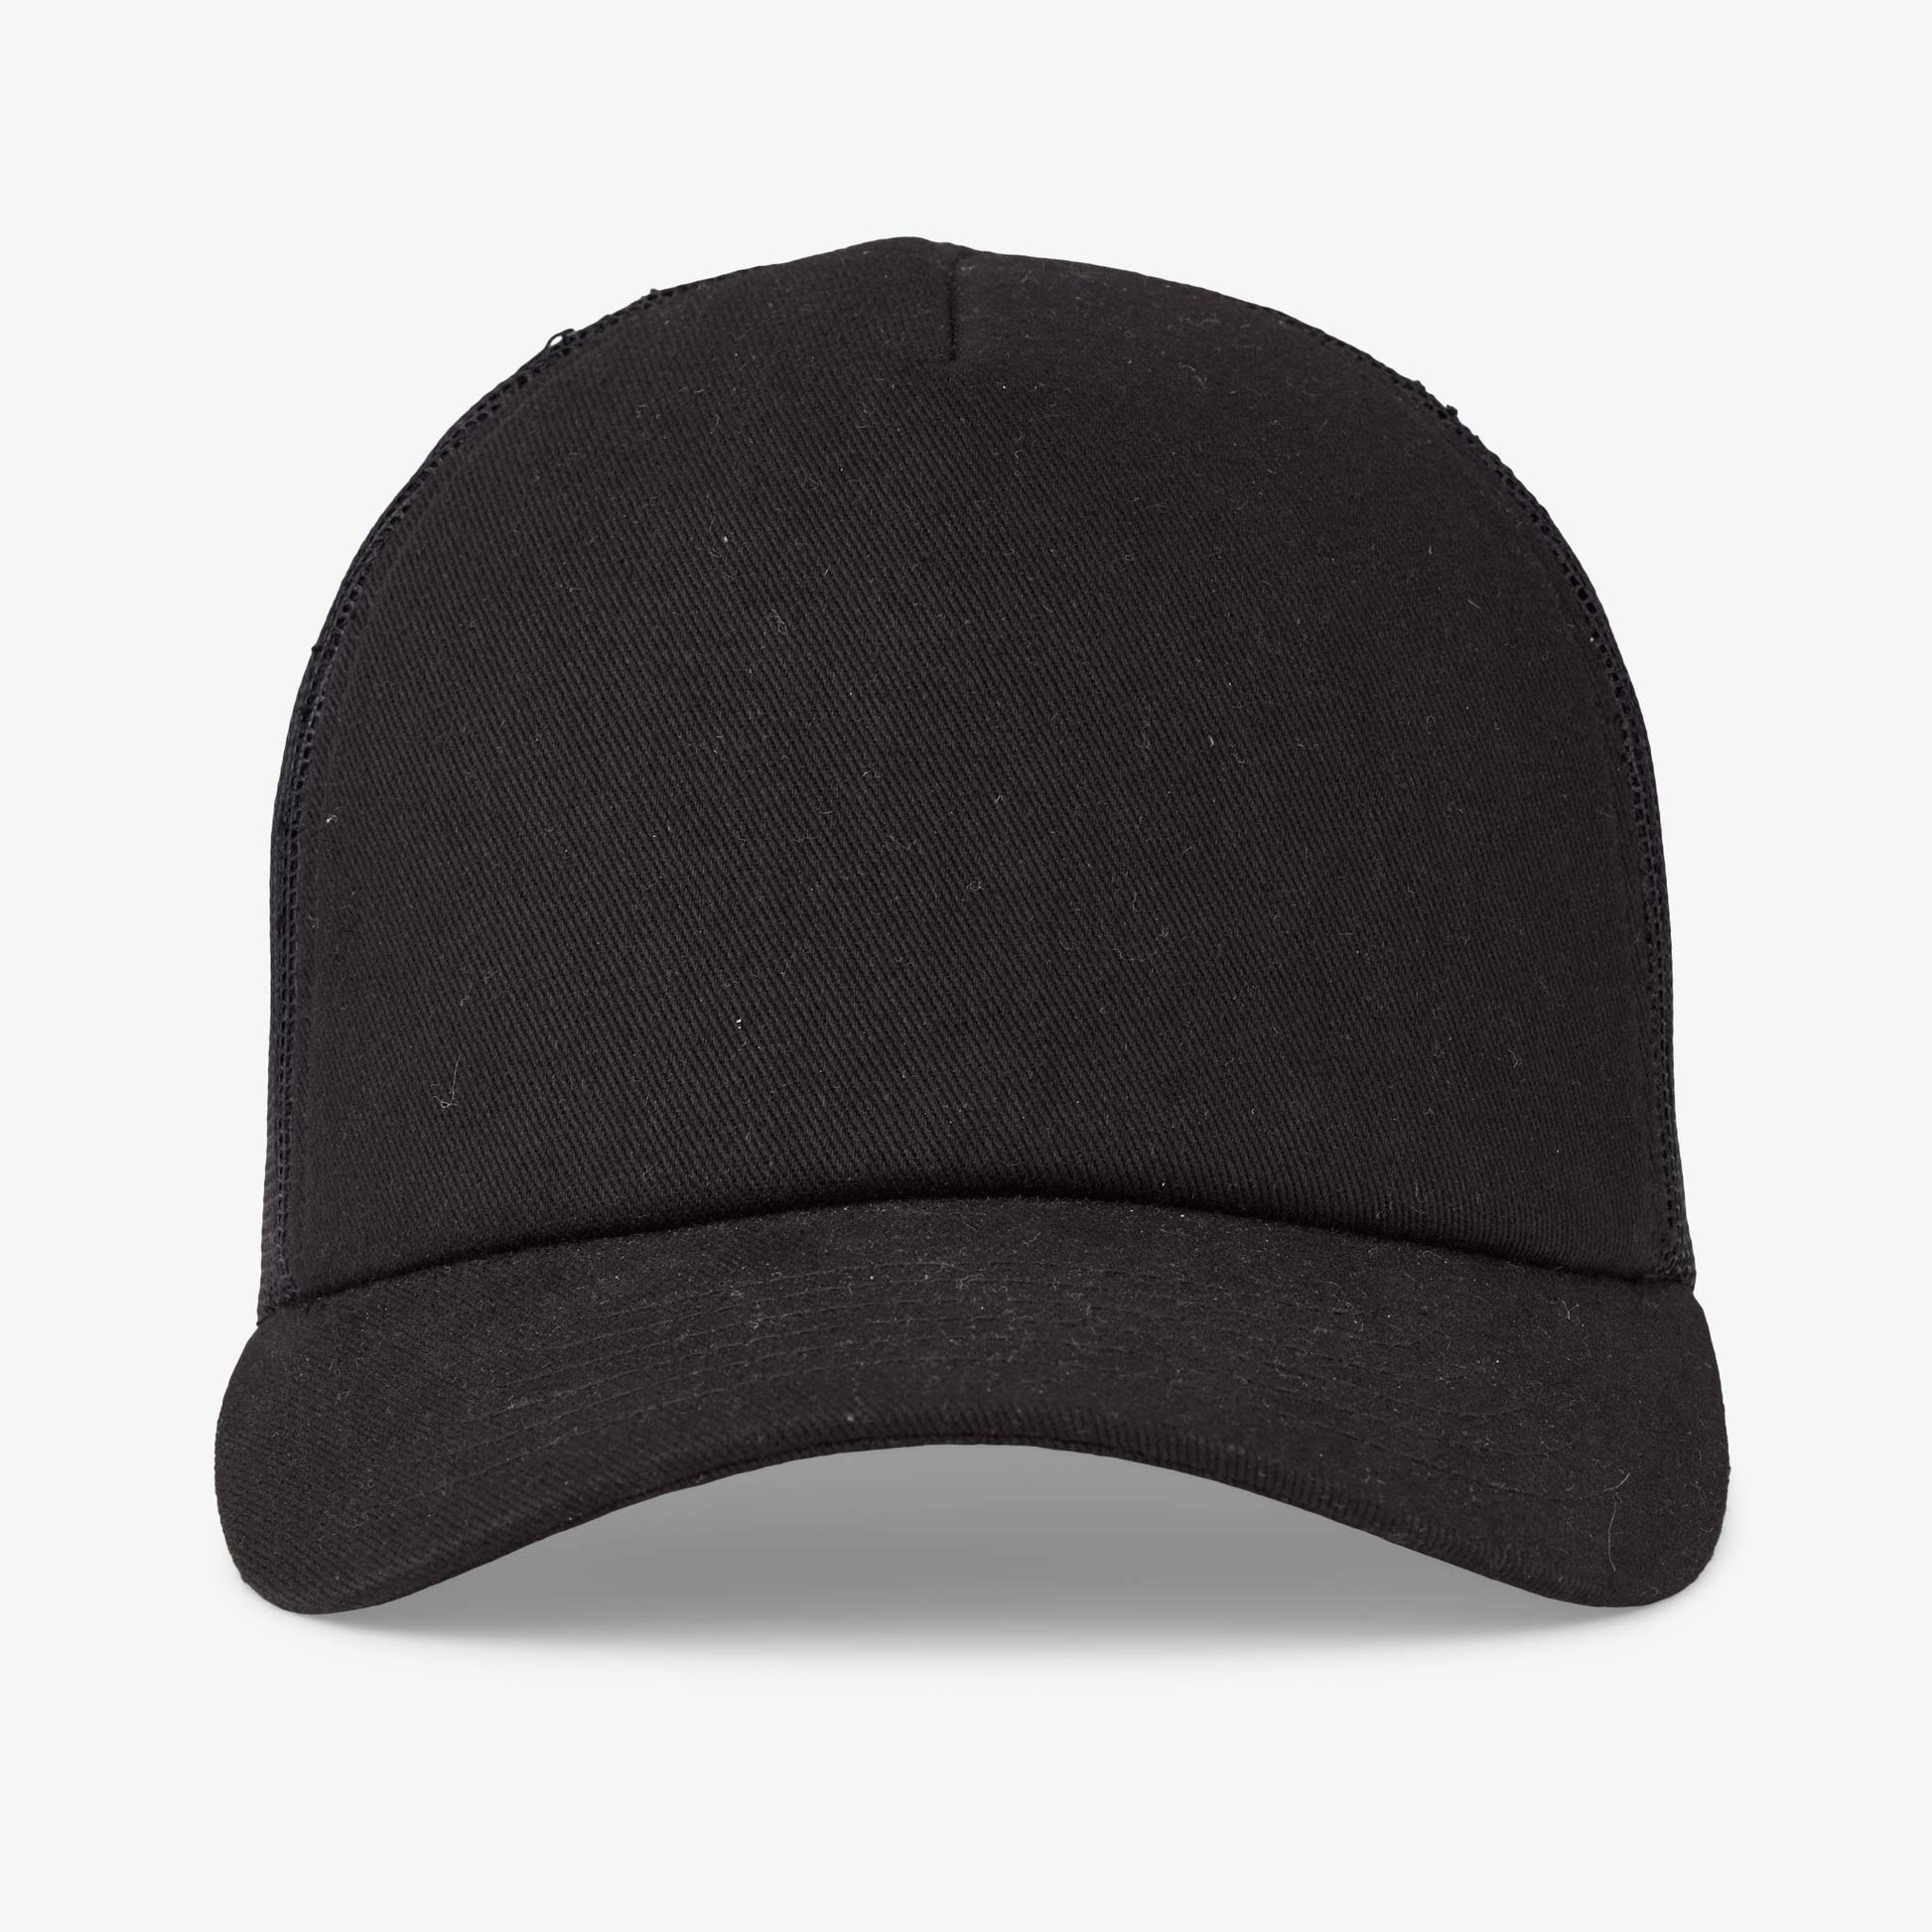 Upfront Nordic Headwear - PIGMENT Trucker Cap - Black Beauty - Headz Up 